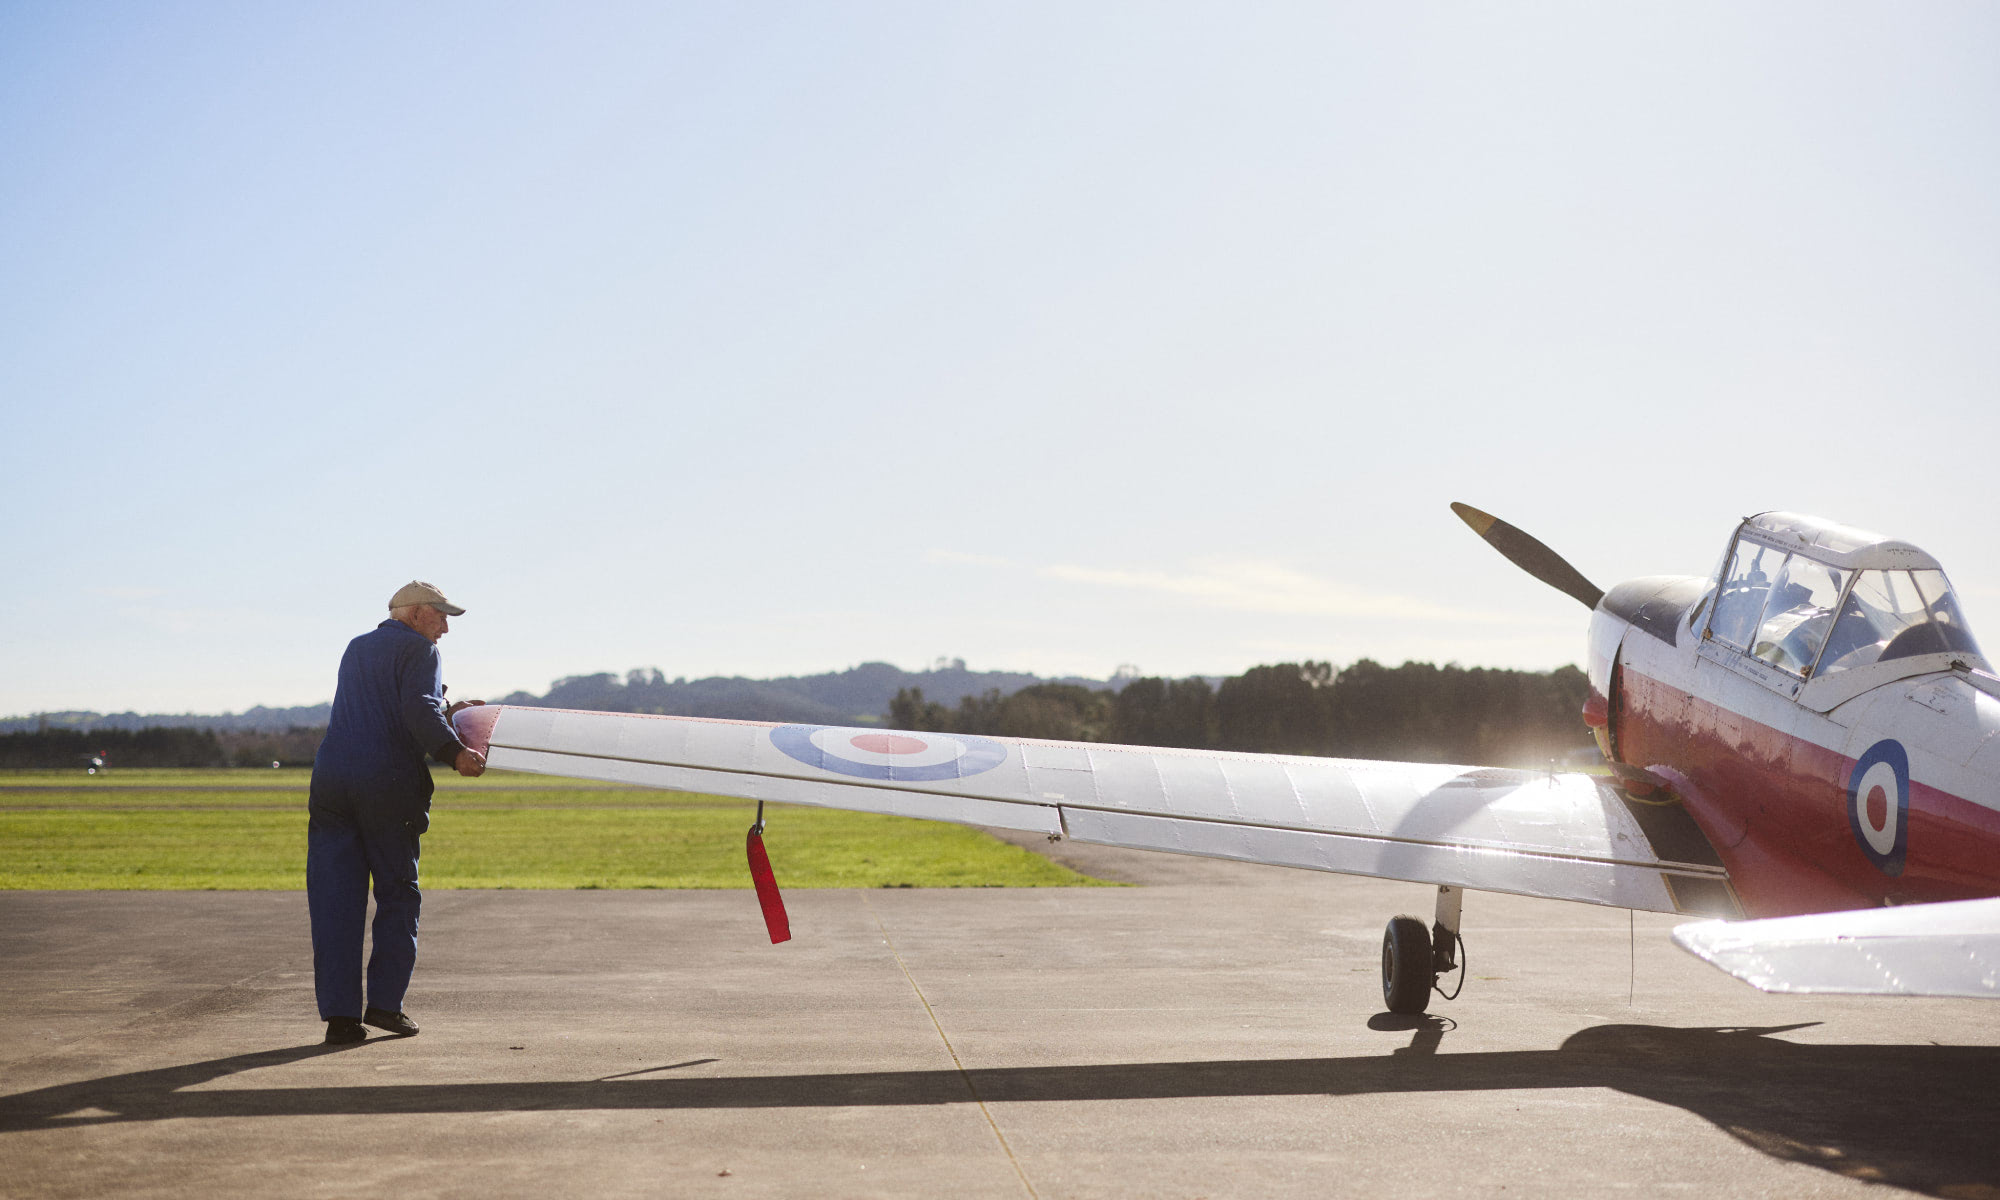 Man holding wing on New Zealand War Bird plane on the runway